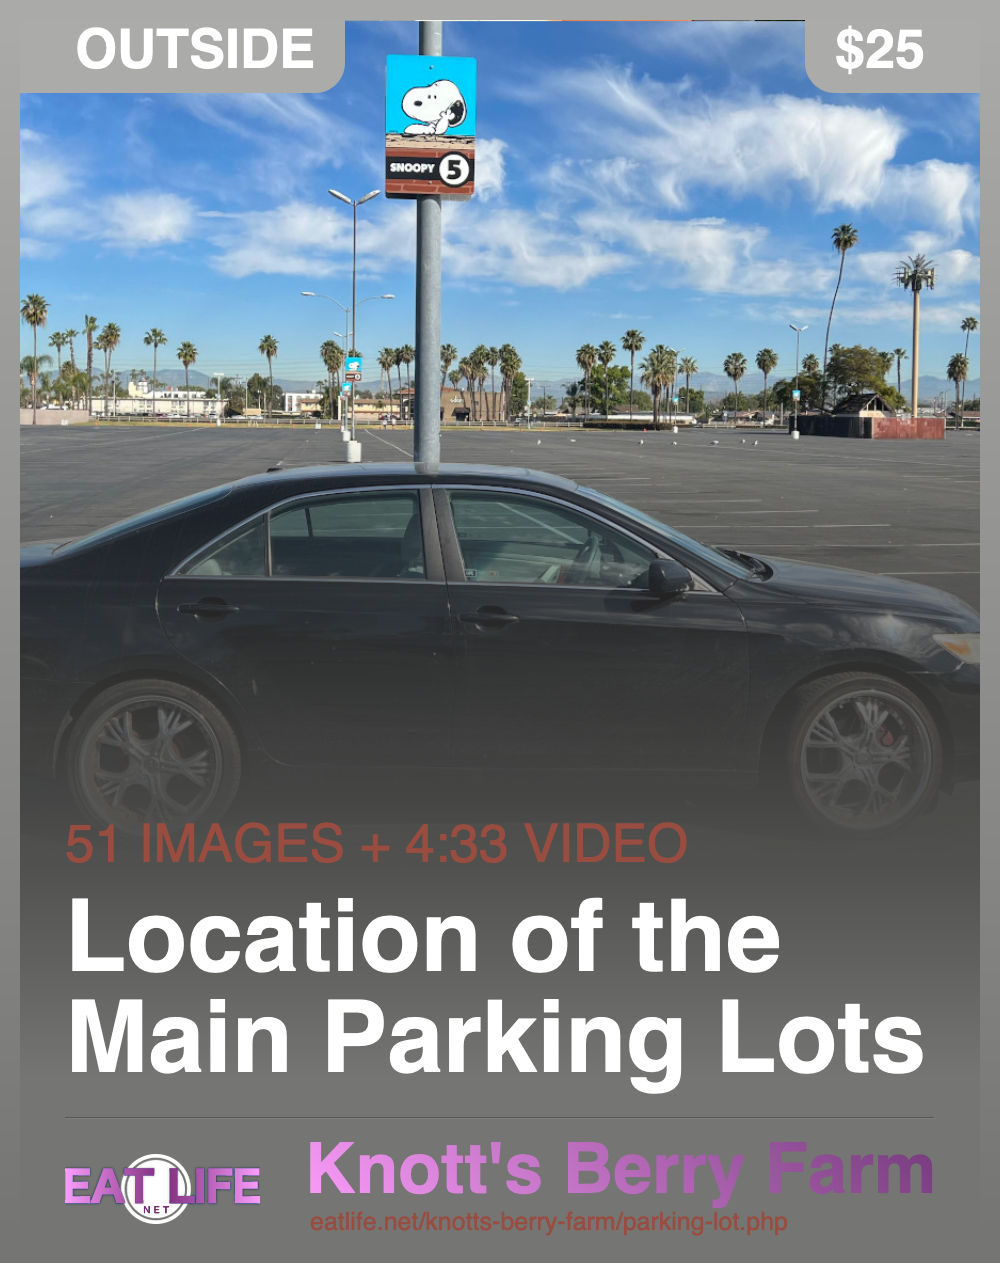 Parking Lots: $25